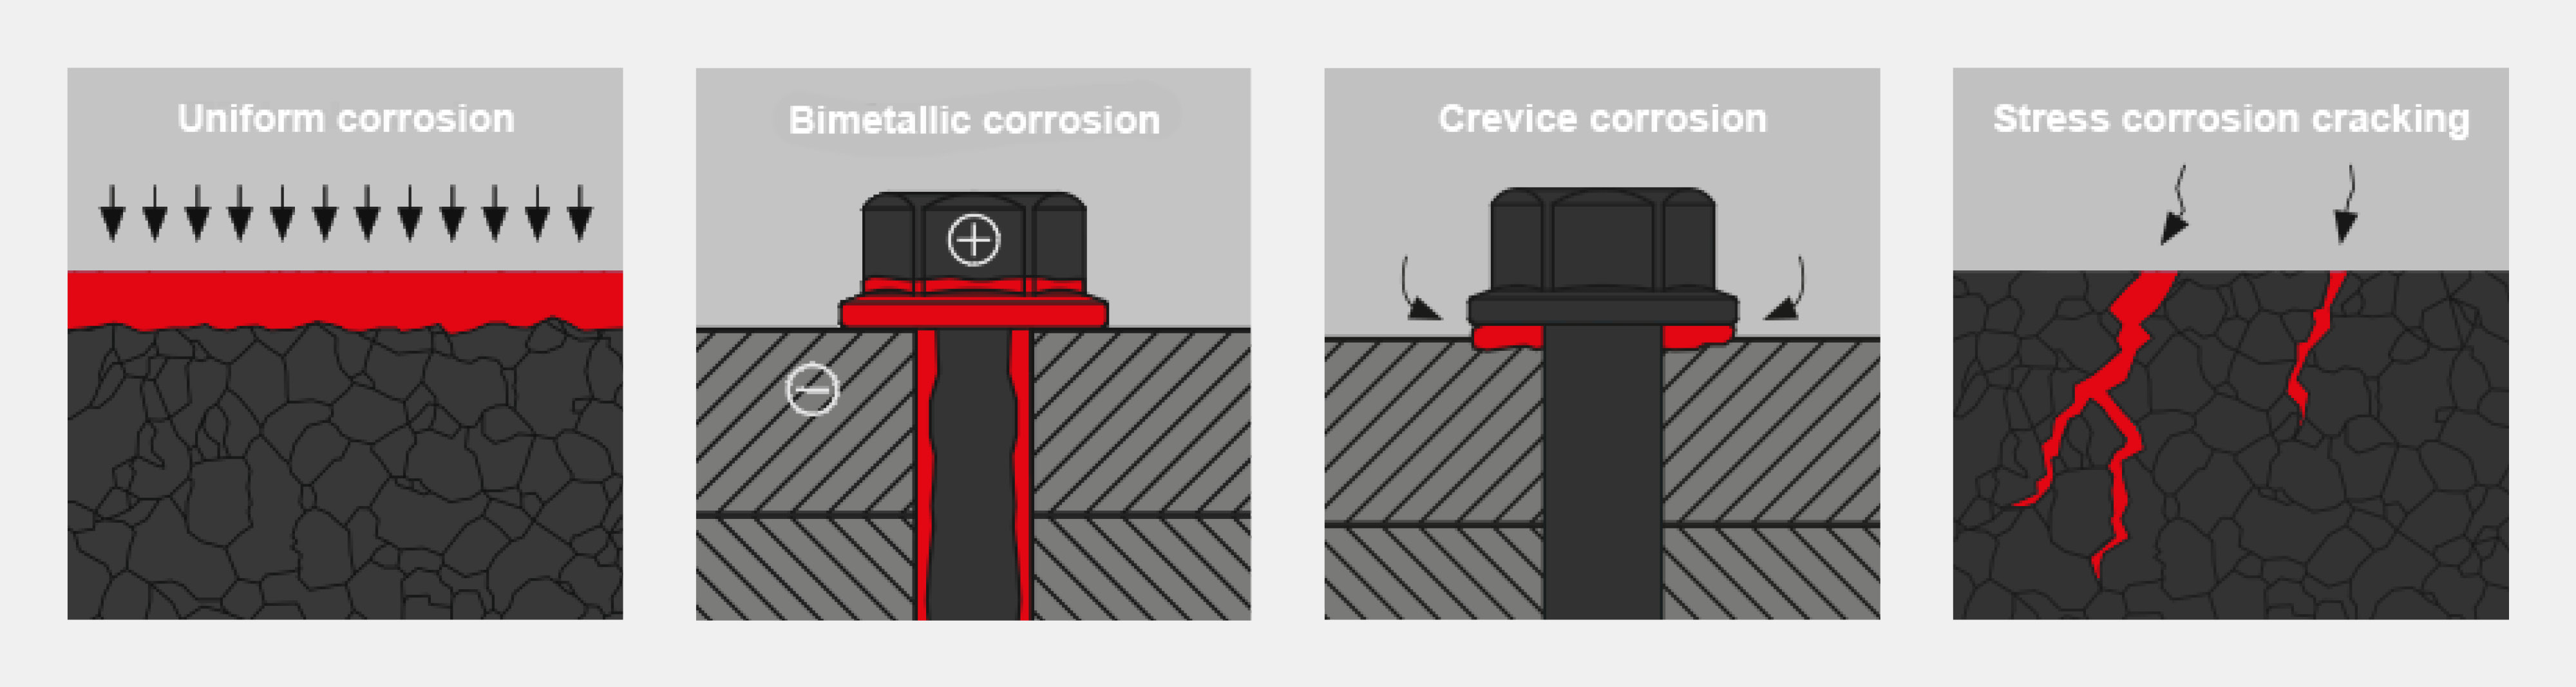 4 types of corrosion: Uniform corrosion, bimetallic corrosion, crevice corrosion, stress corrosion cracking